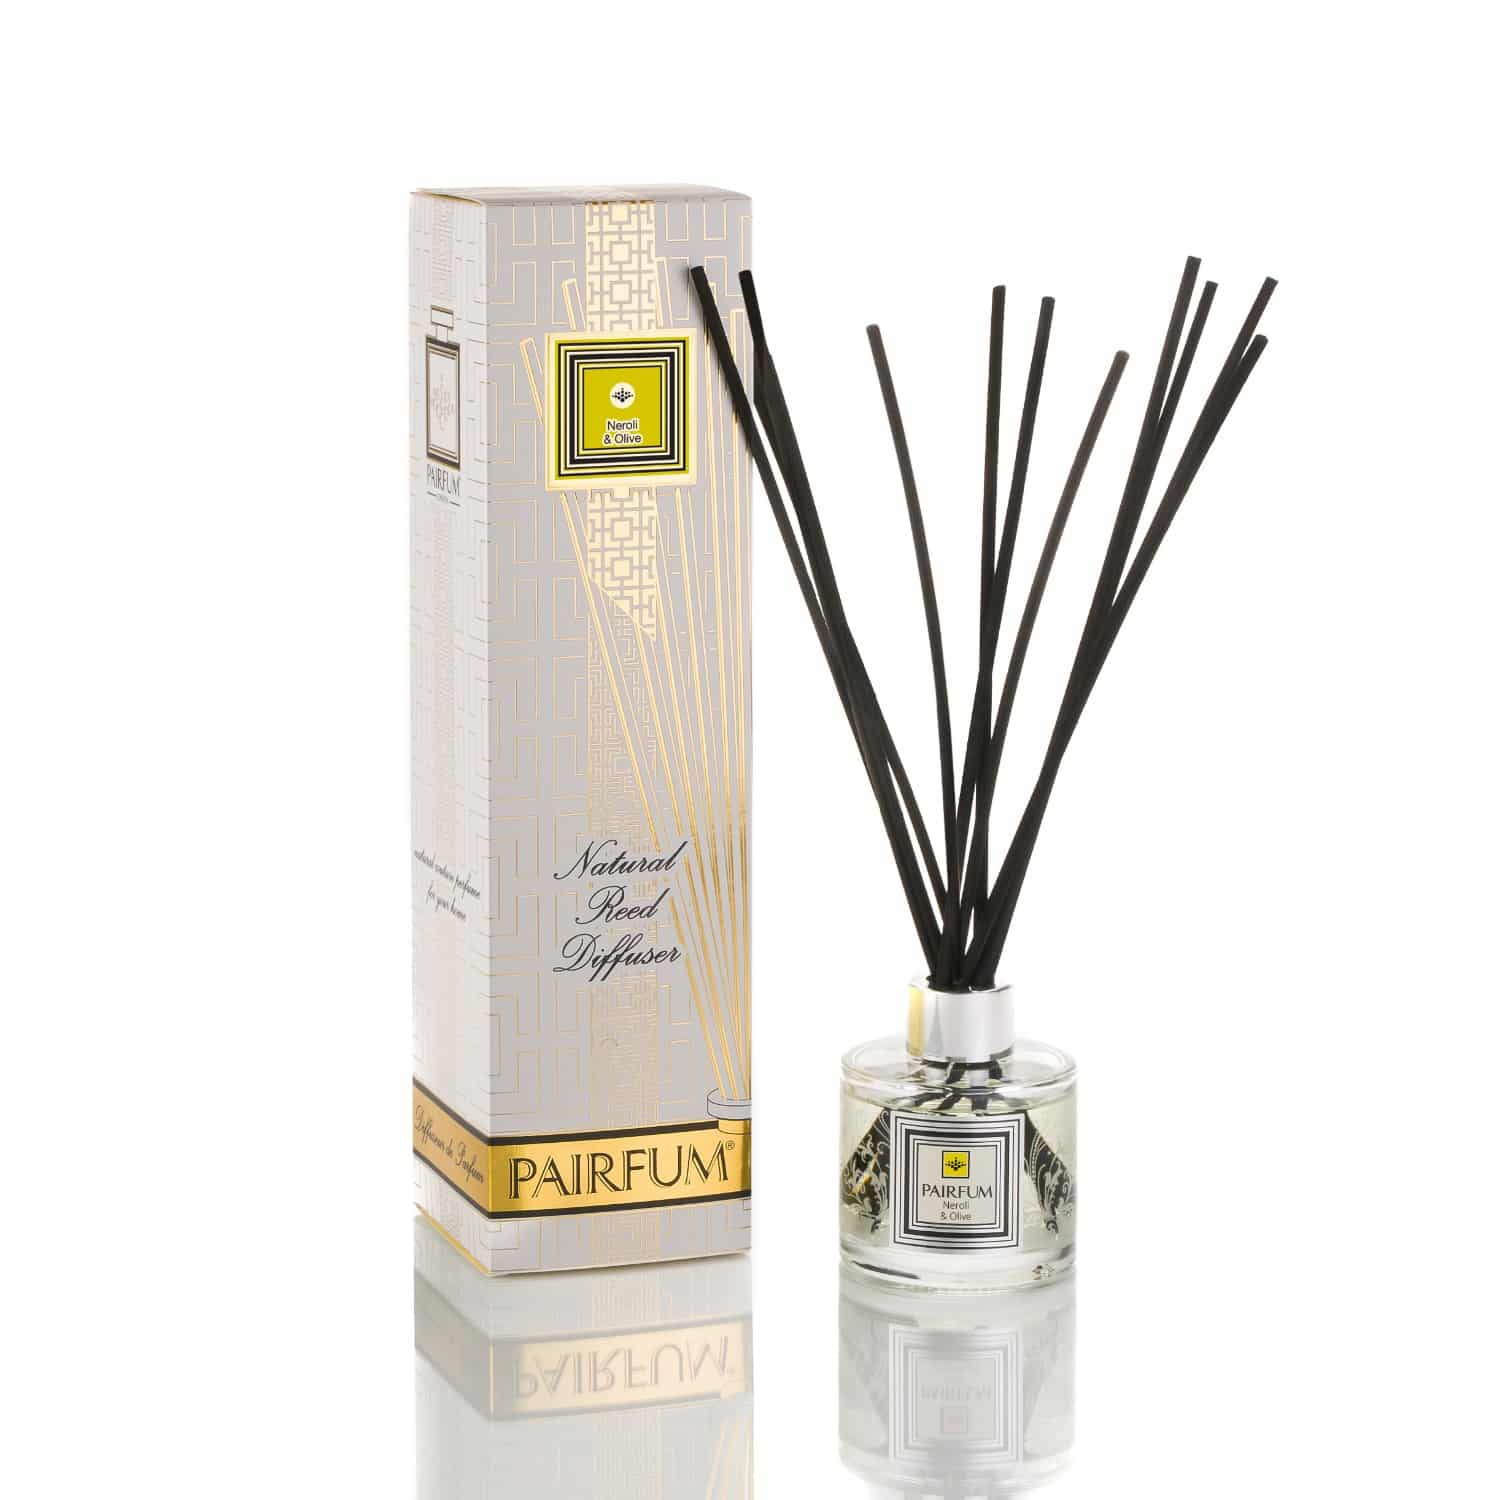 Pairfum Reed Diffuser Tower Classic - Neroli & Olive - Choose Your Perfume: neroli-olive